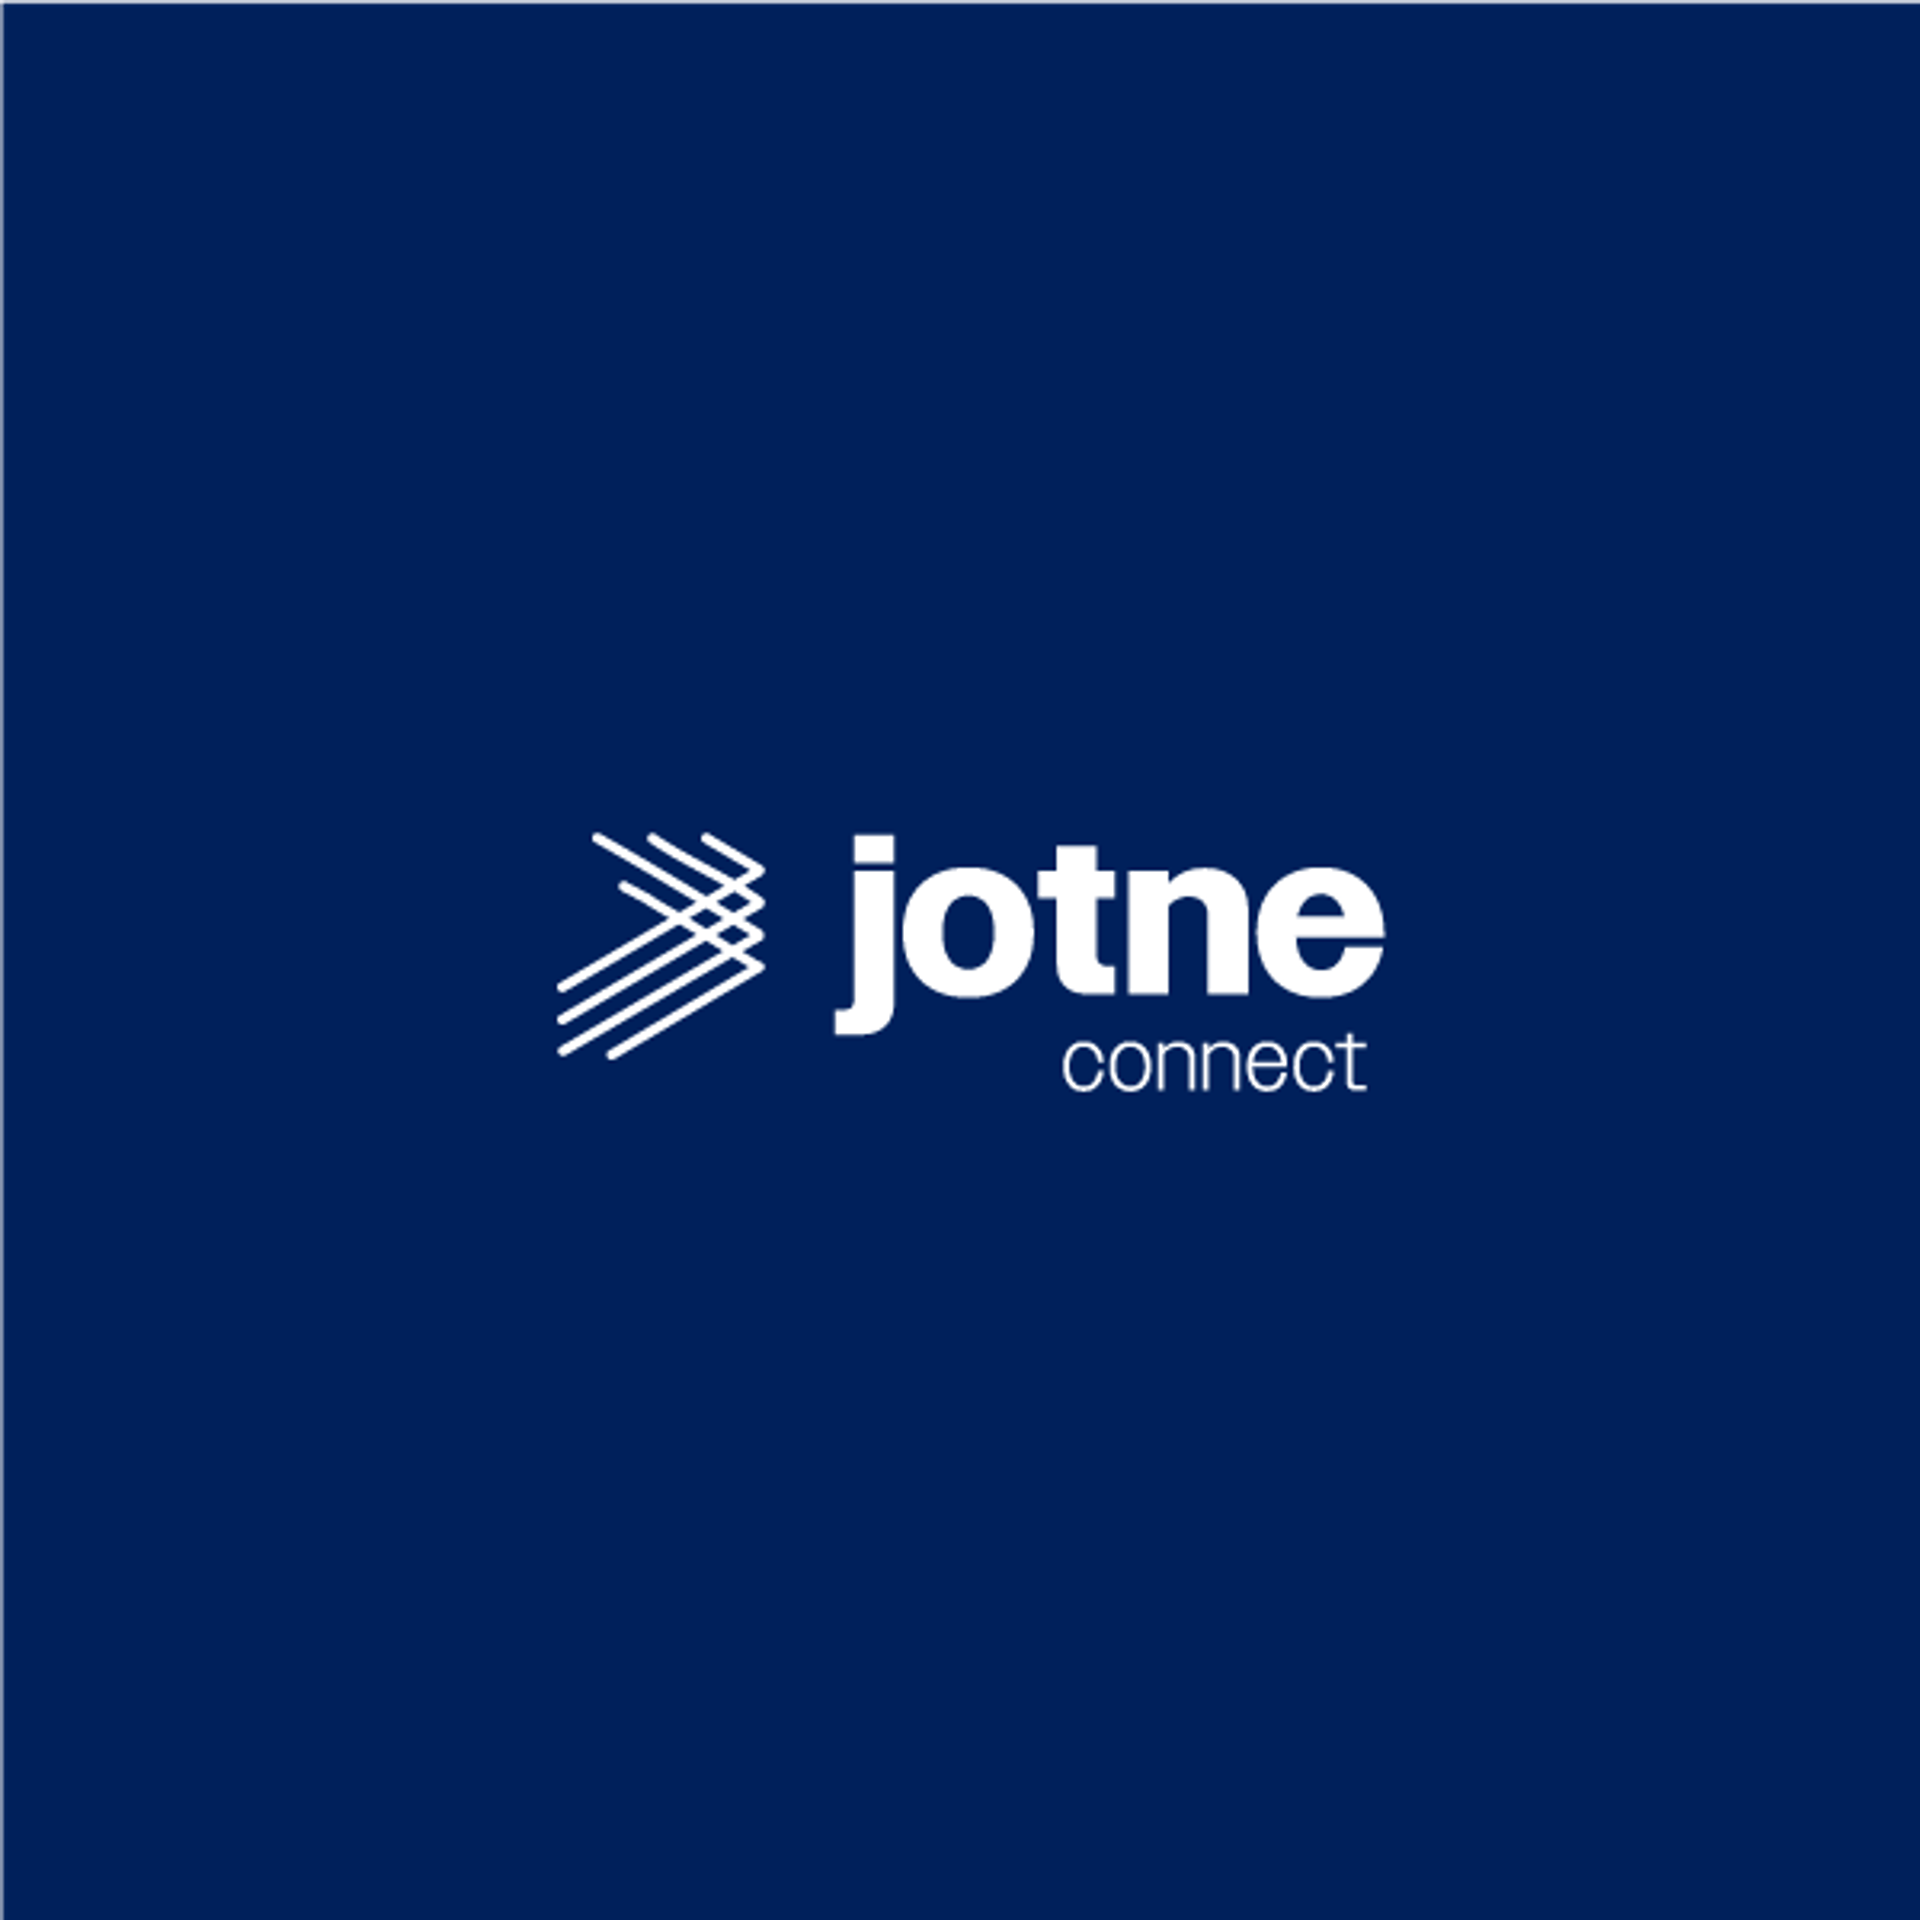 Jotne connect logo